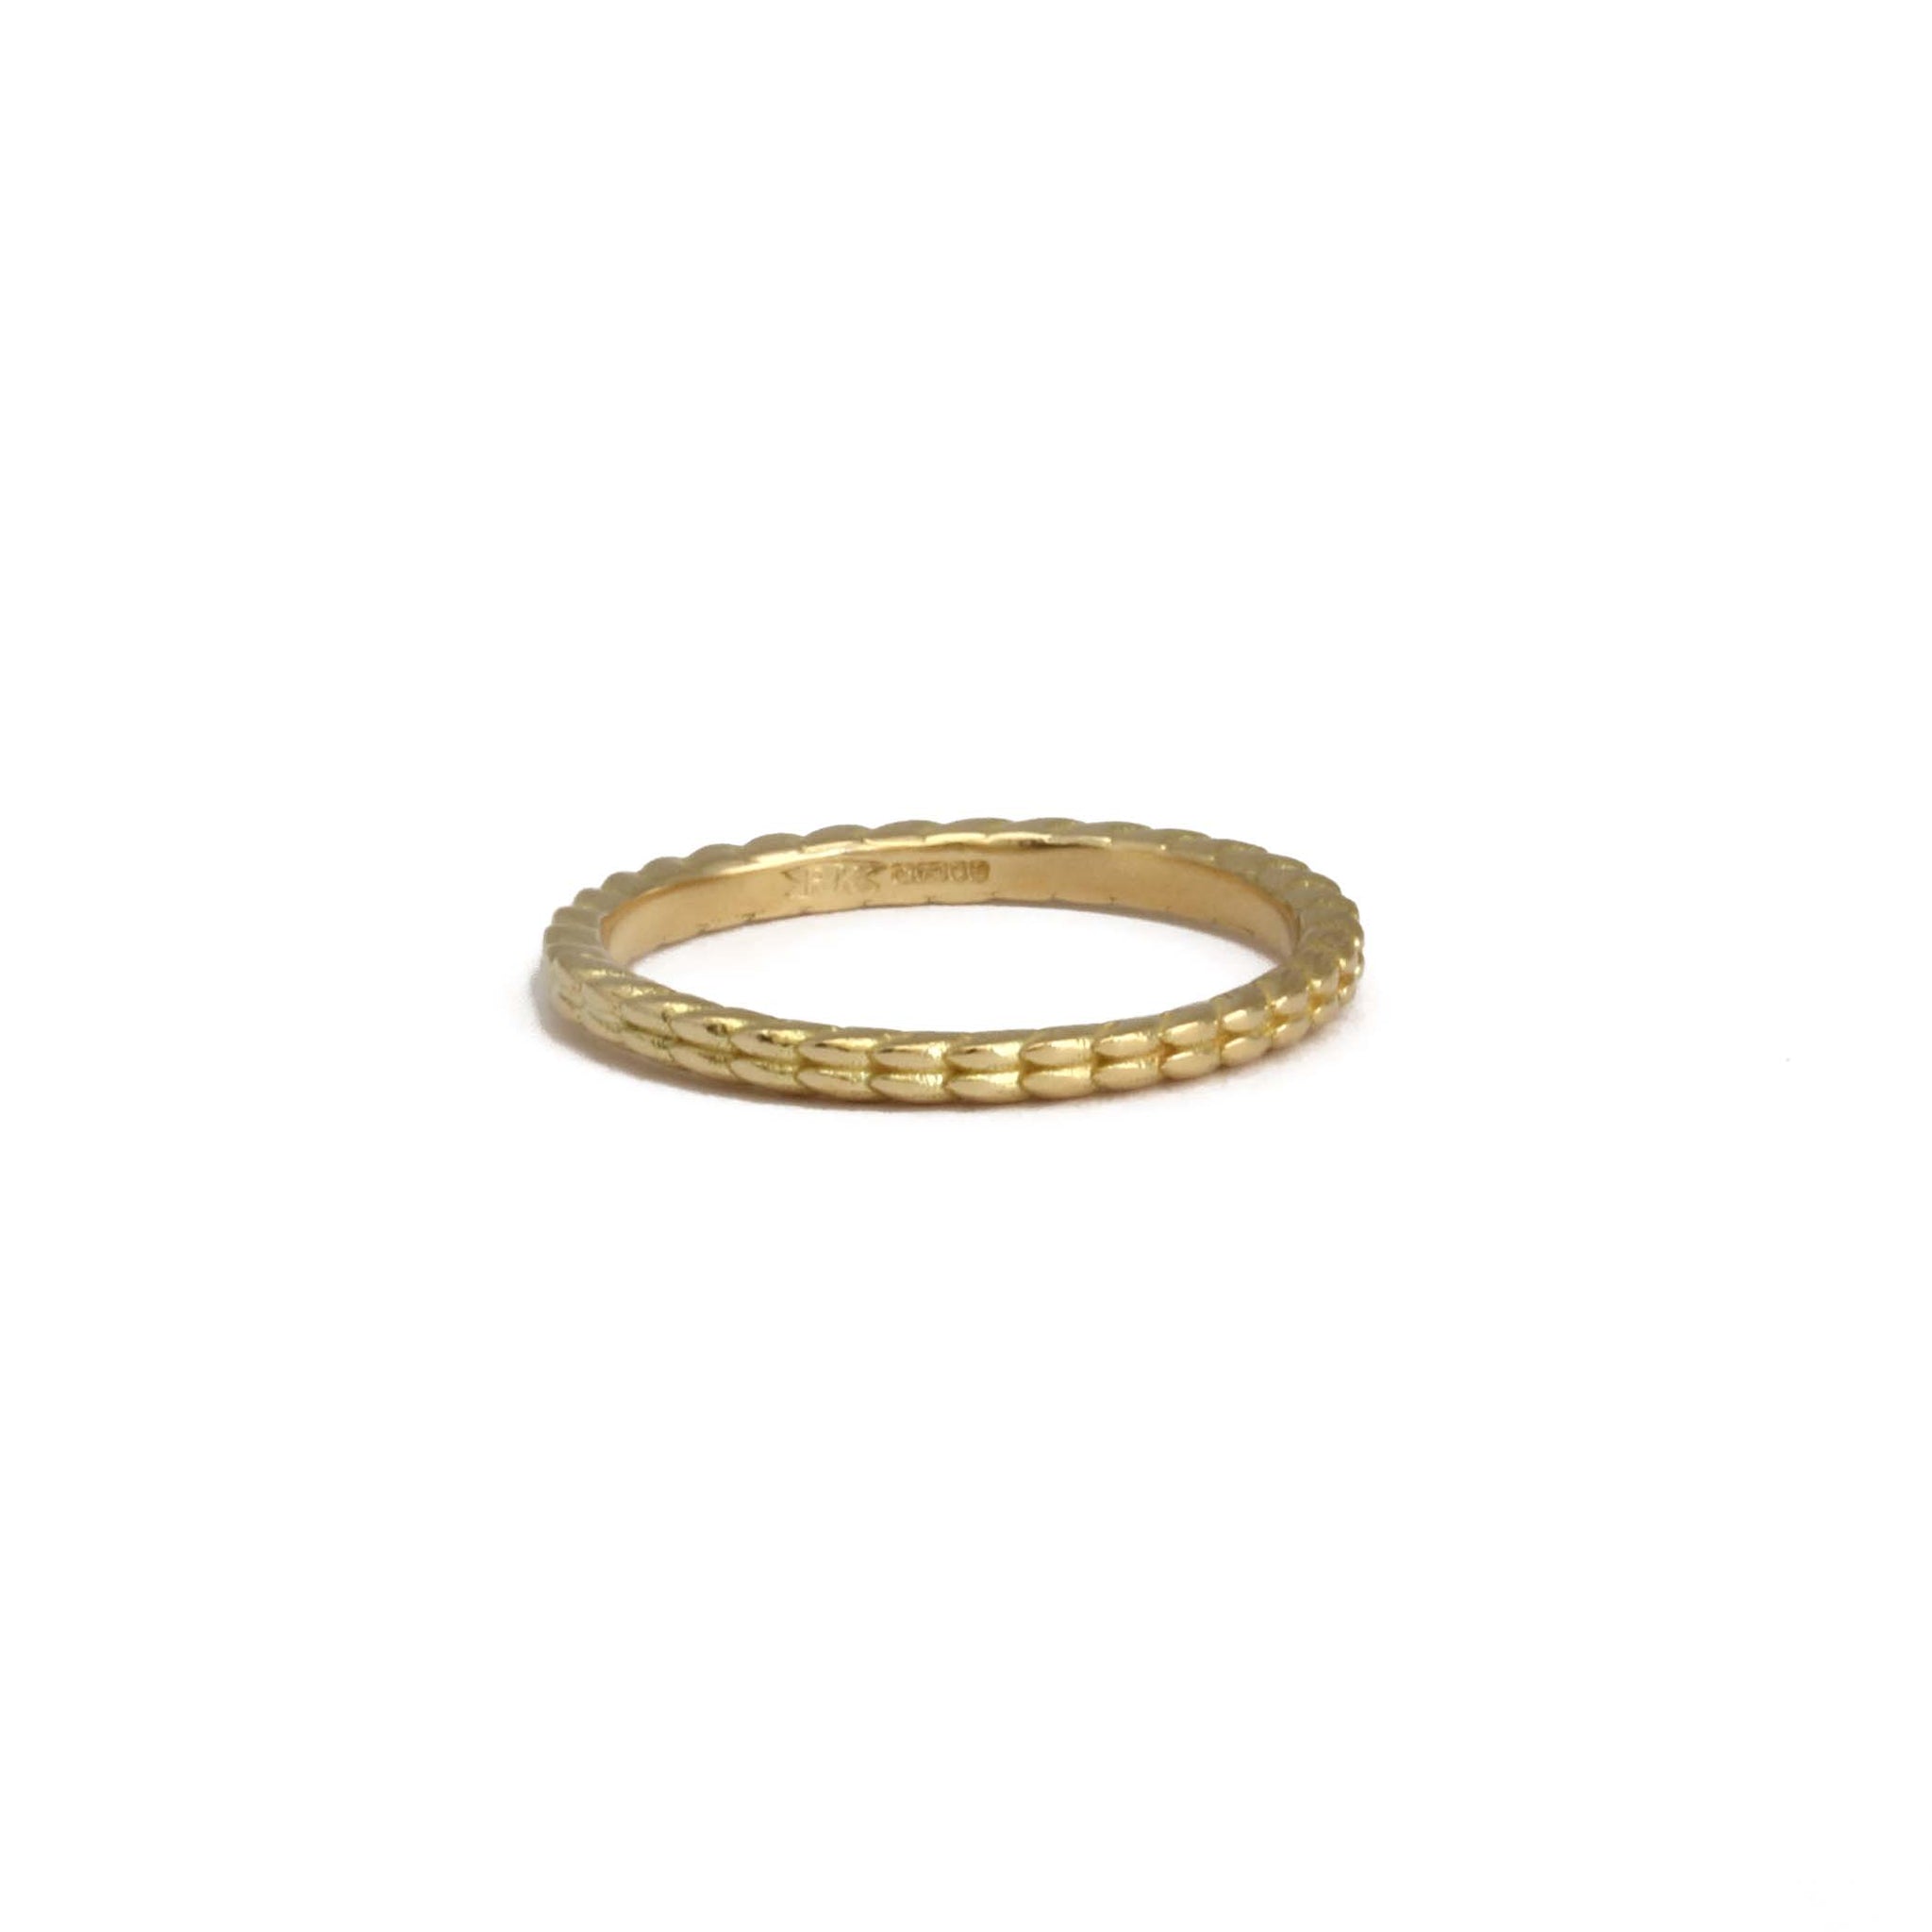 2mm thick 18ct white gold Tagmata Knot Ring